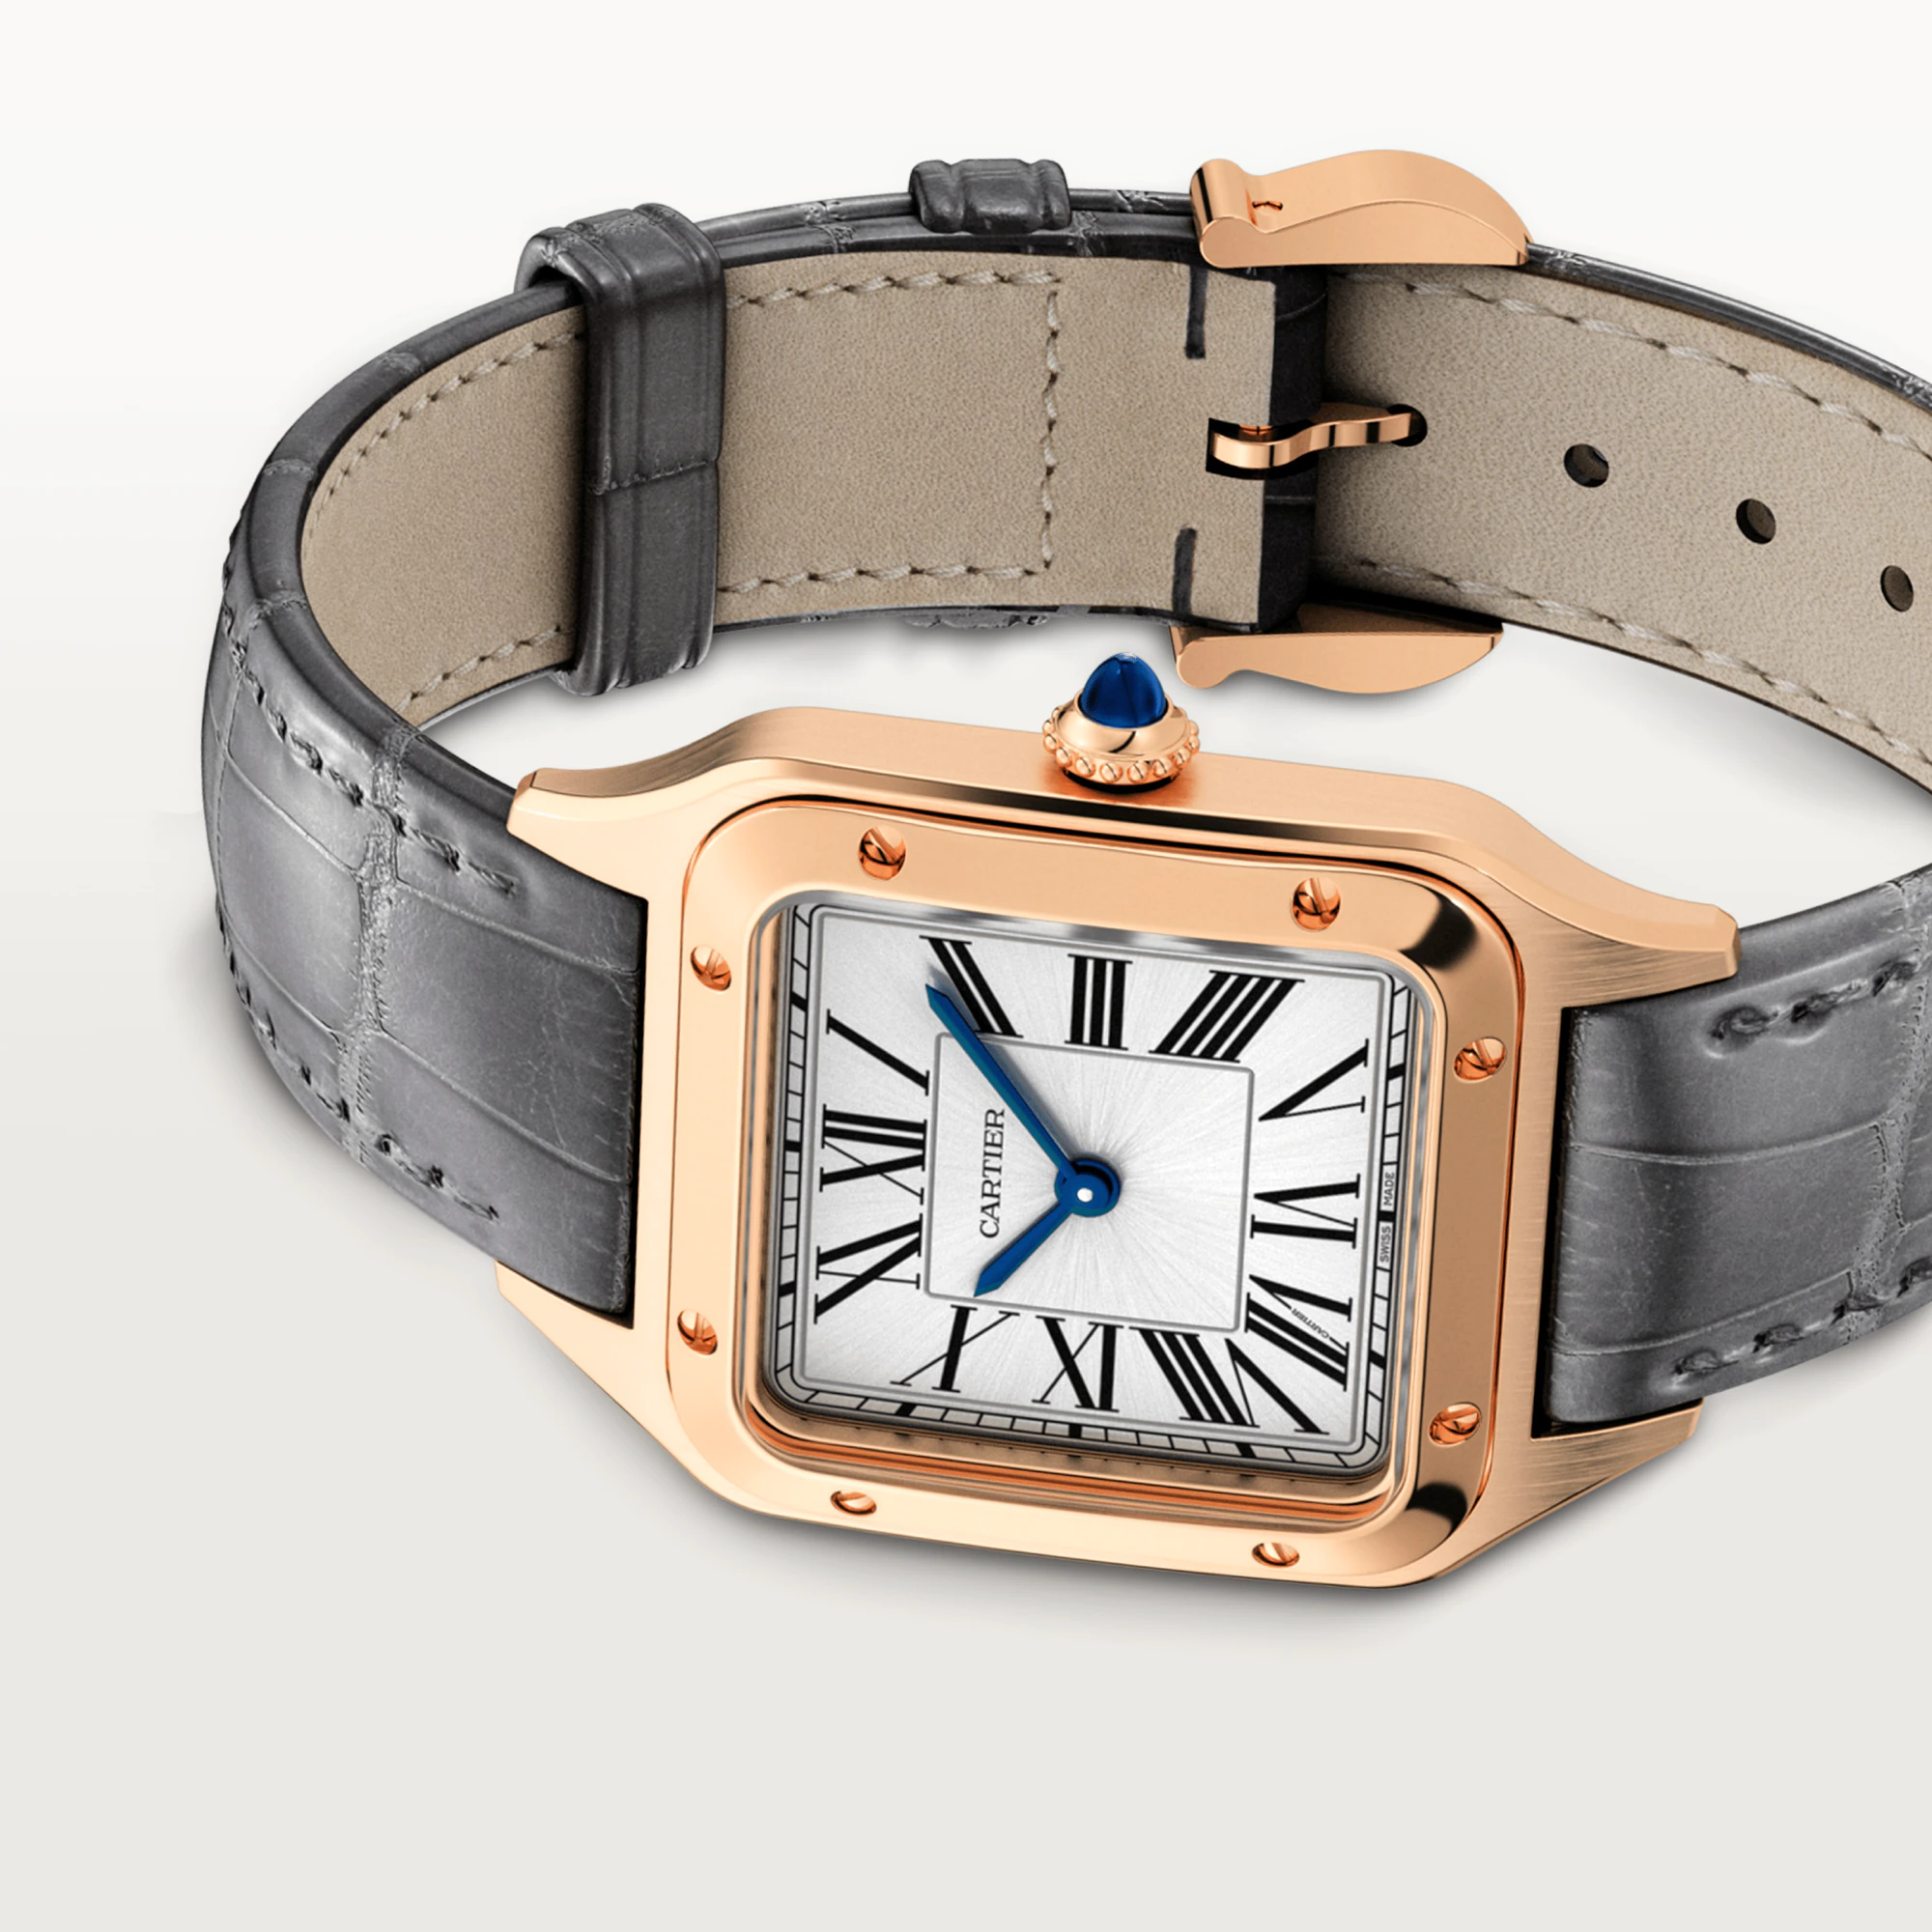 Cartier Santos 18K Rose Gold Lady's Watch